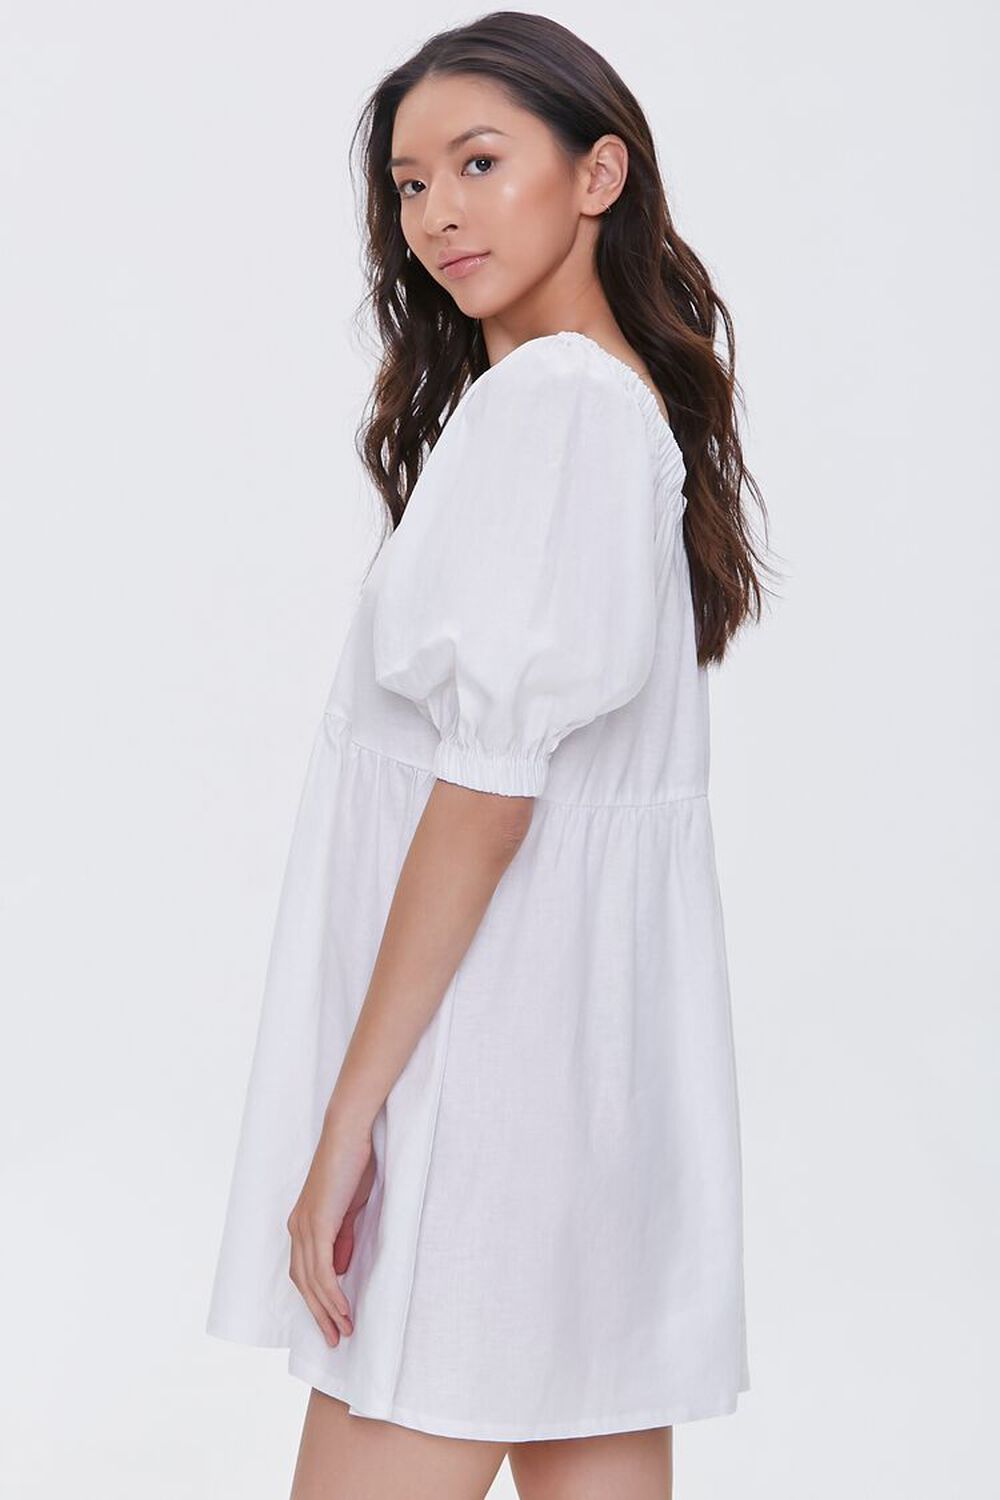 WHITE Linen-Blend Mini Dress, image 2